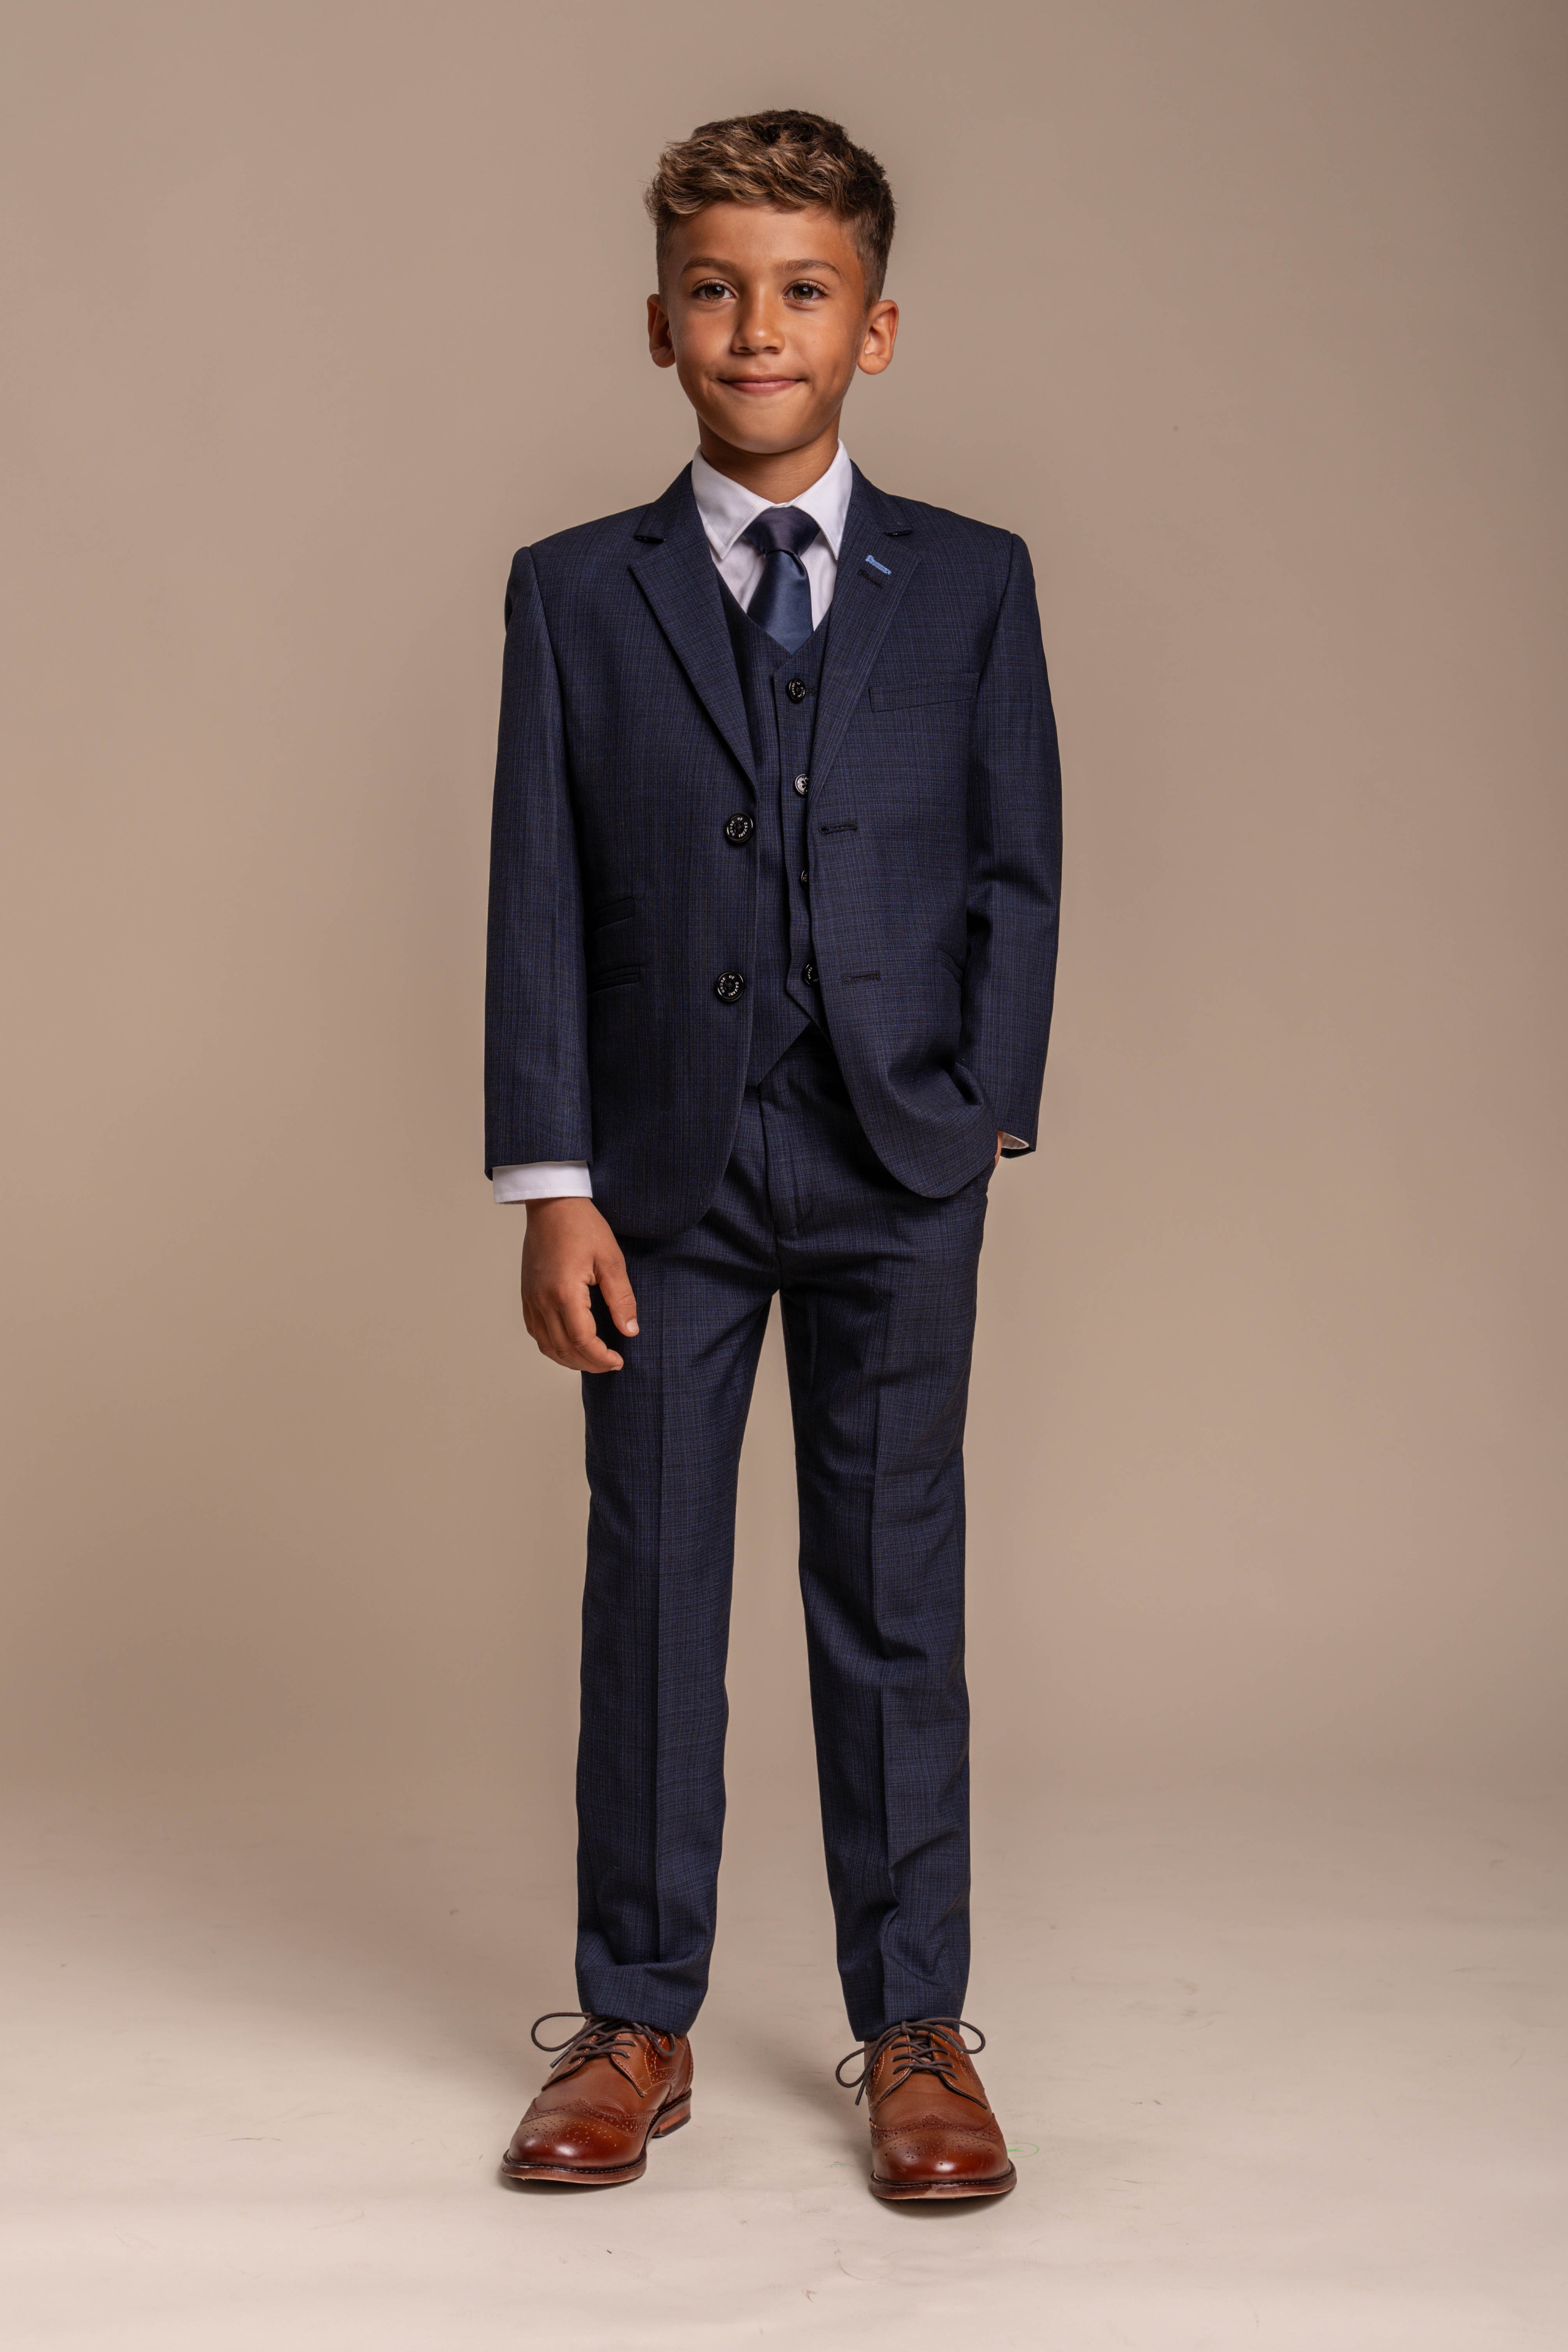 Boys Slim Fit Windowpane Suit 2 Button Kids Formal Outfit Set Wedding Suits